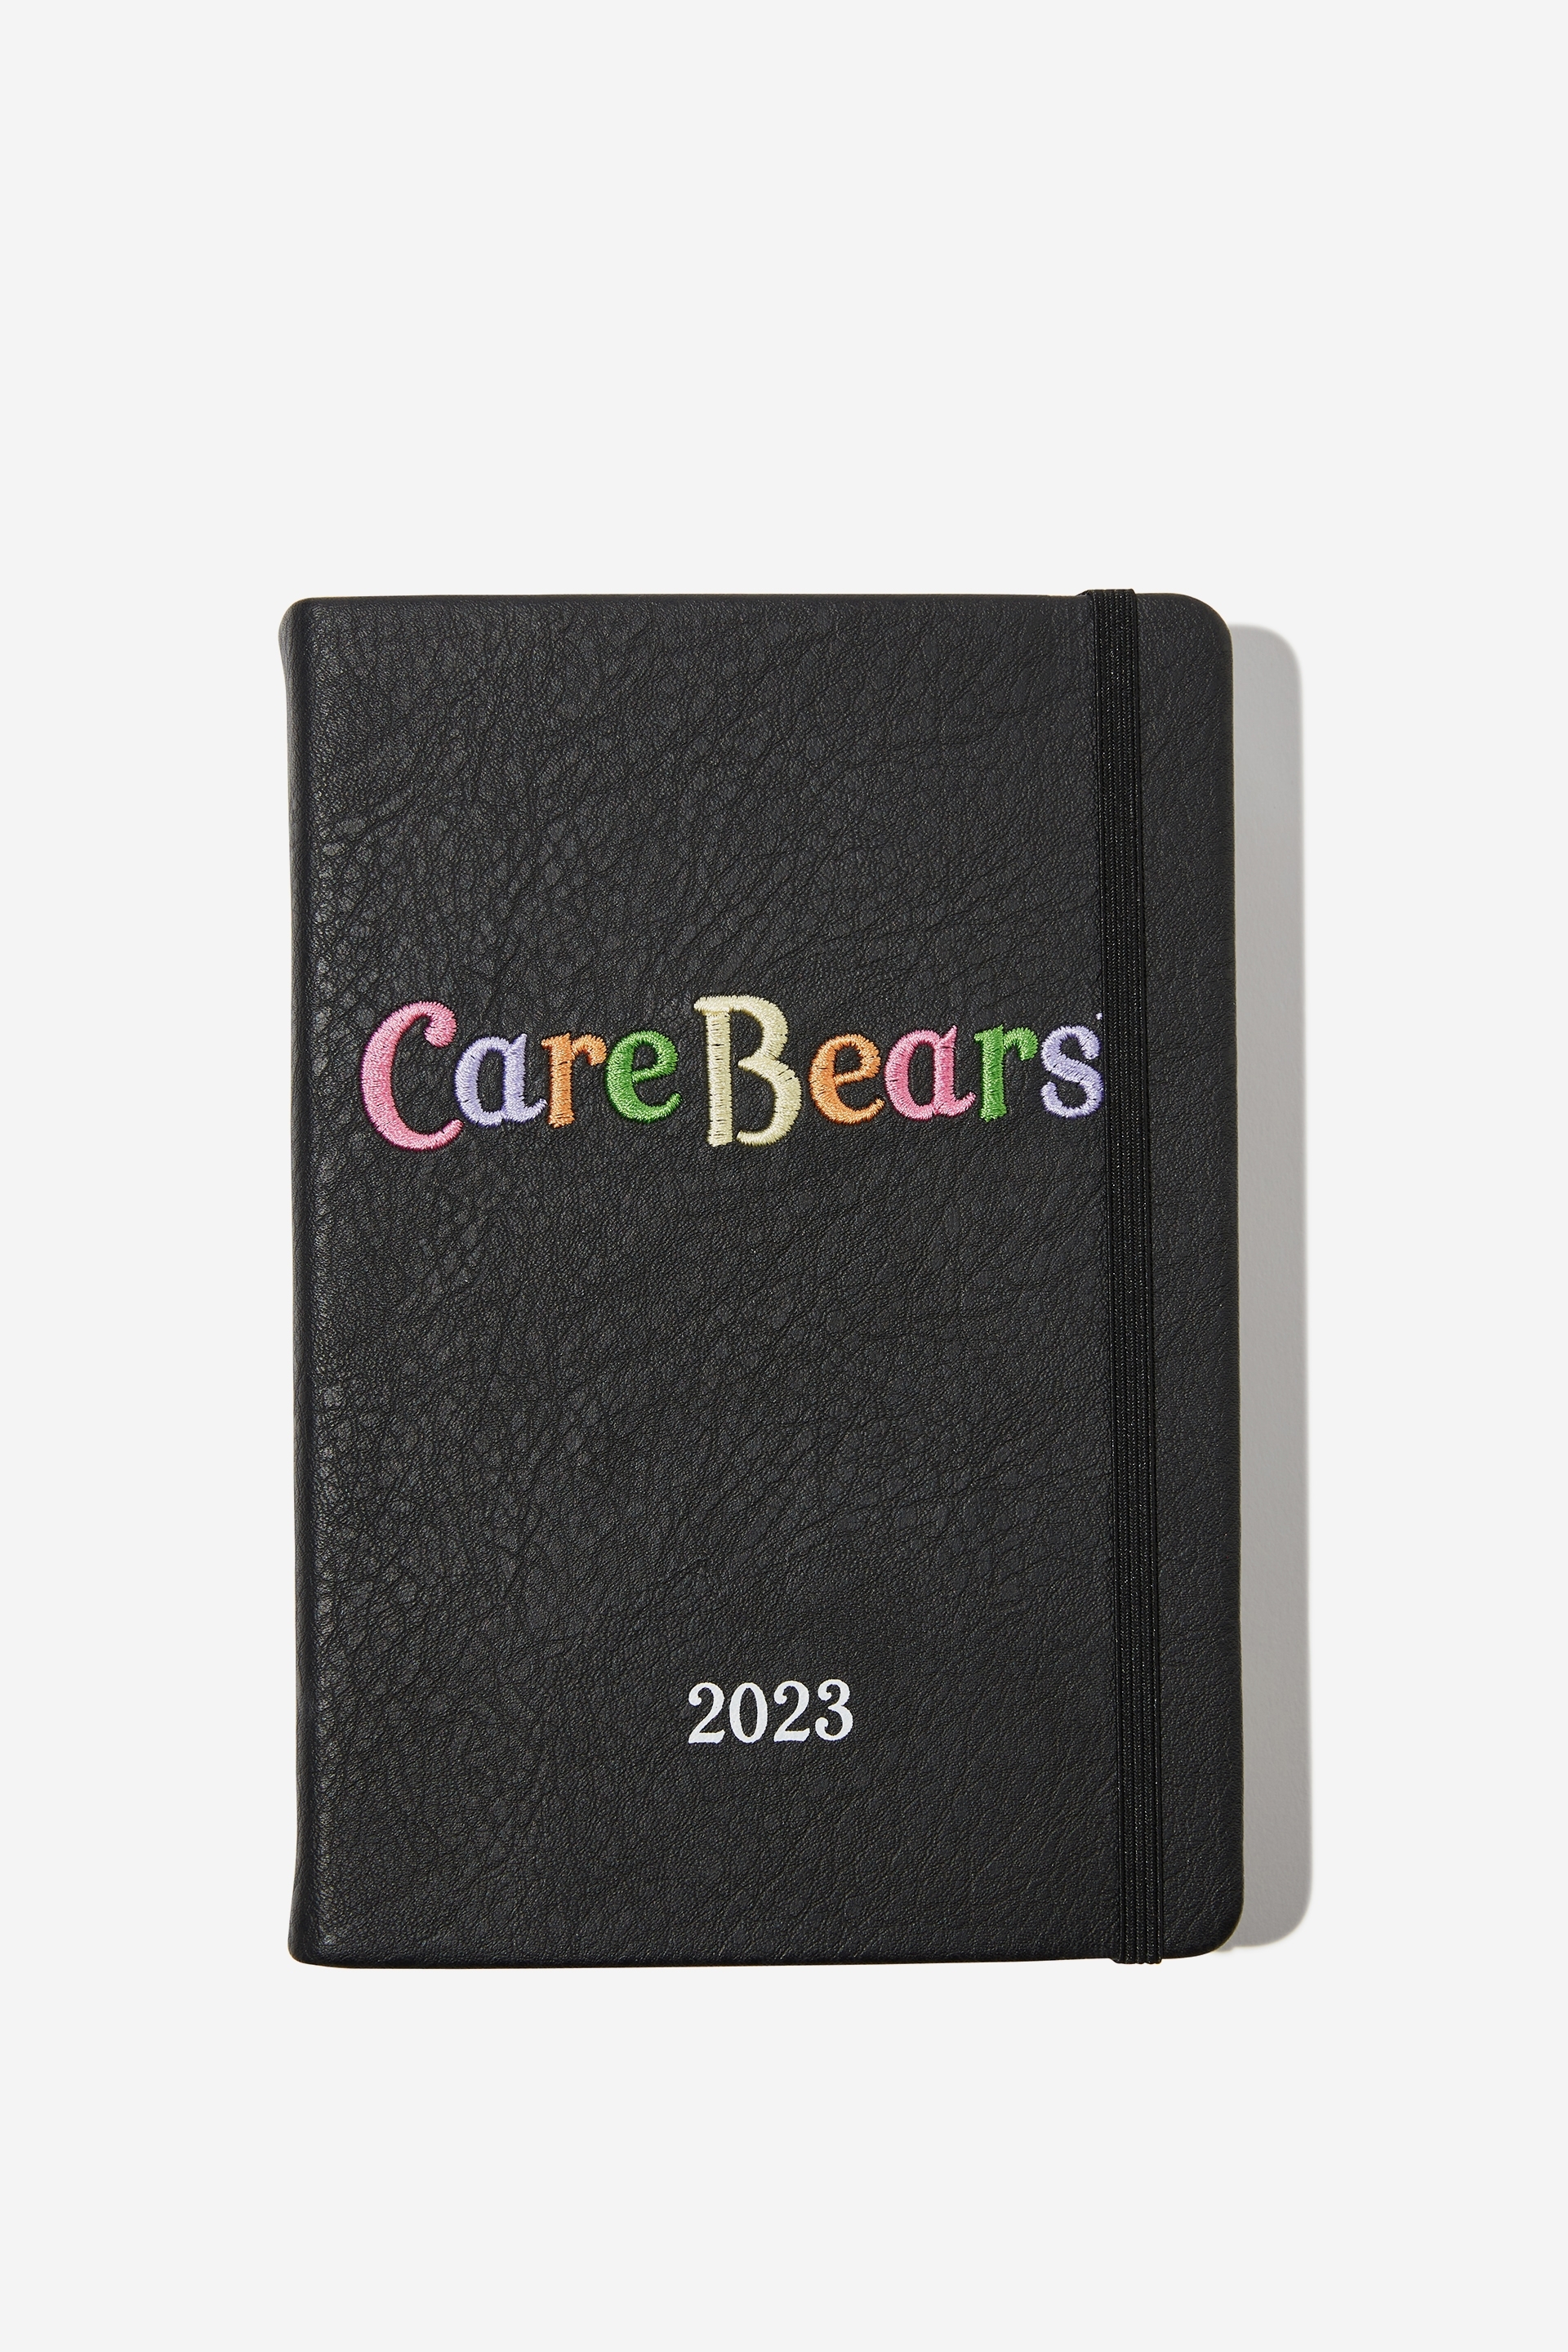 Typo - Care Bears 2023 A5 Daily Buffalo Diary - Lcn clc care bears